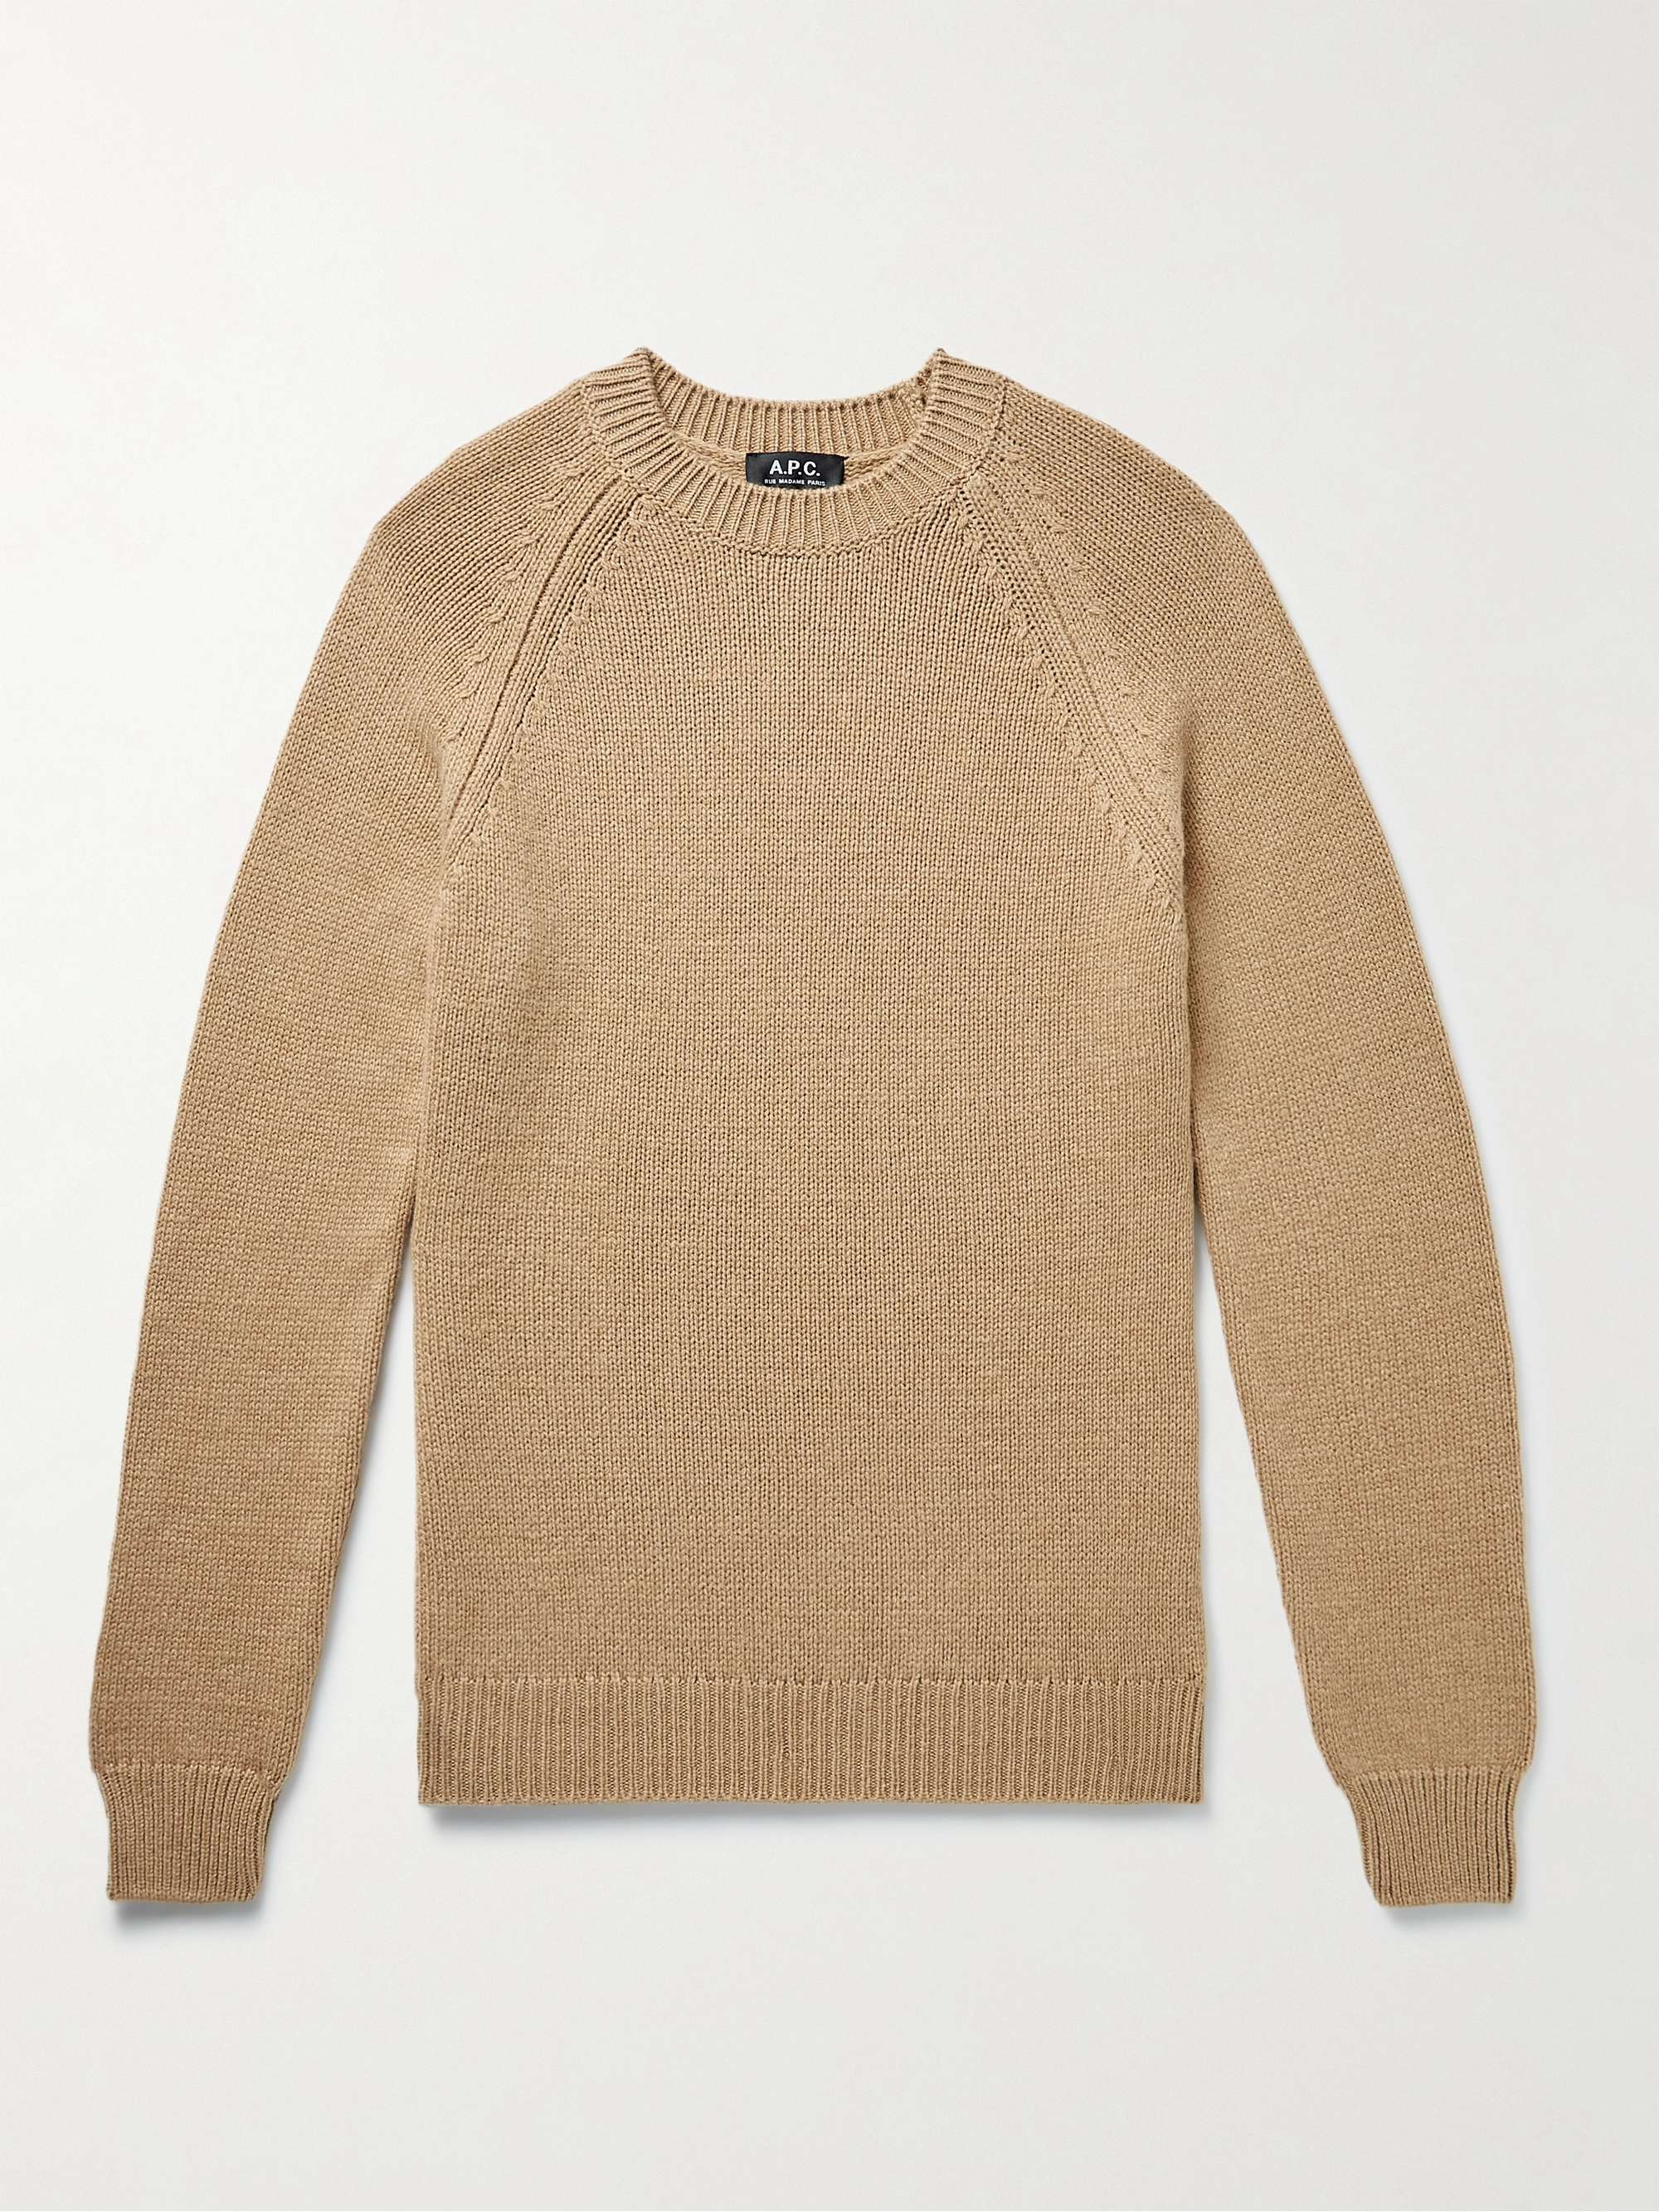 A.P.C. Slim-Fit Virgin Wool Sweater for Men | MR PORTER